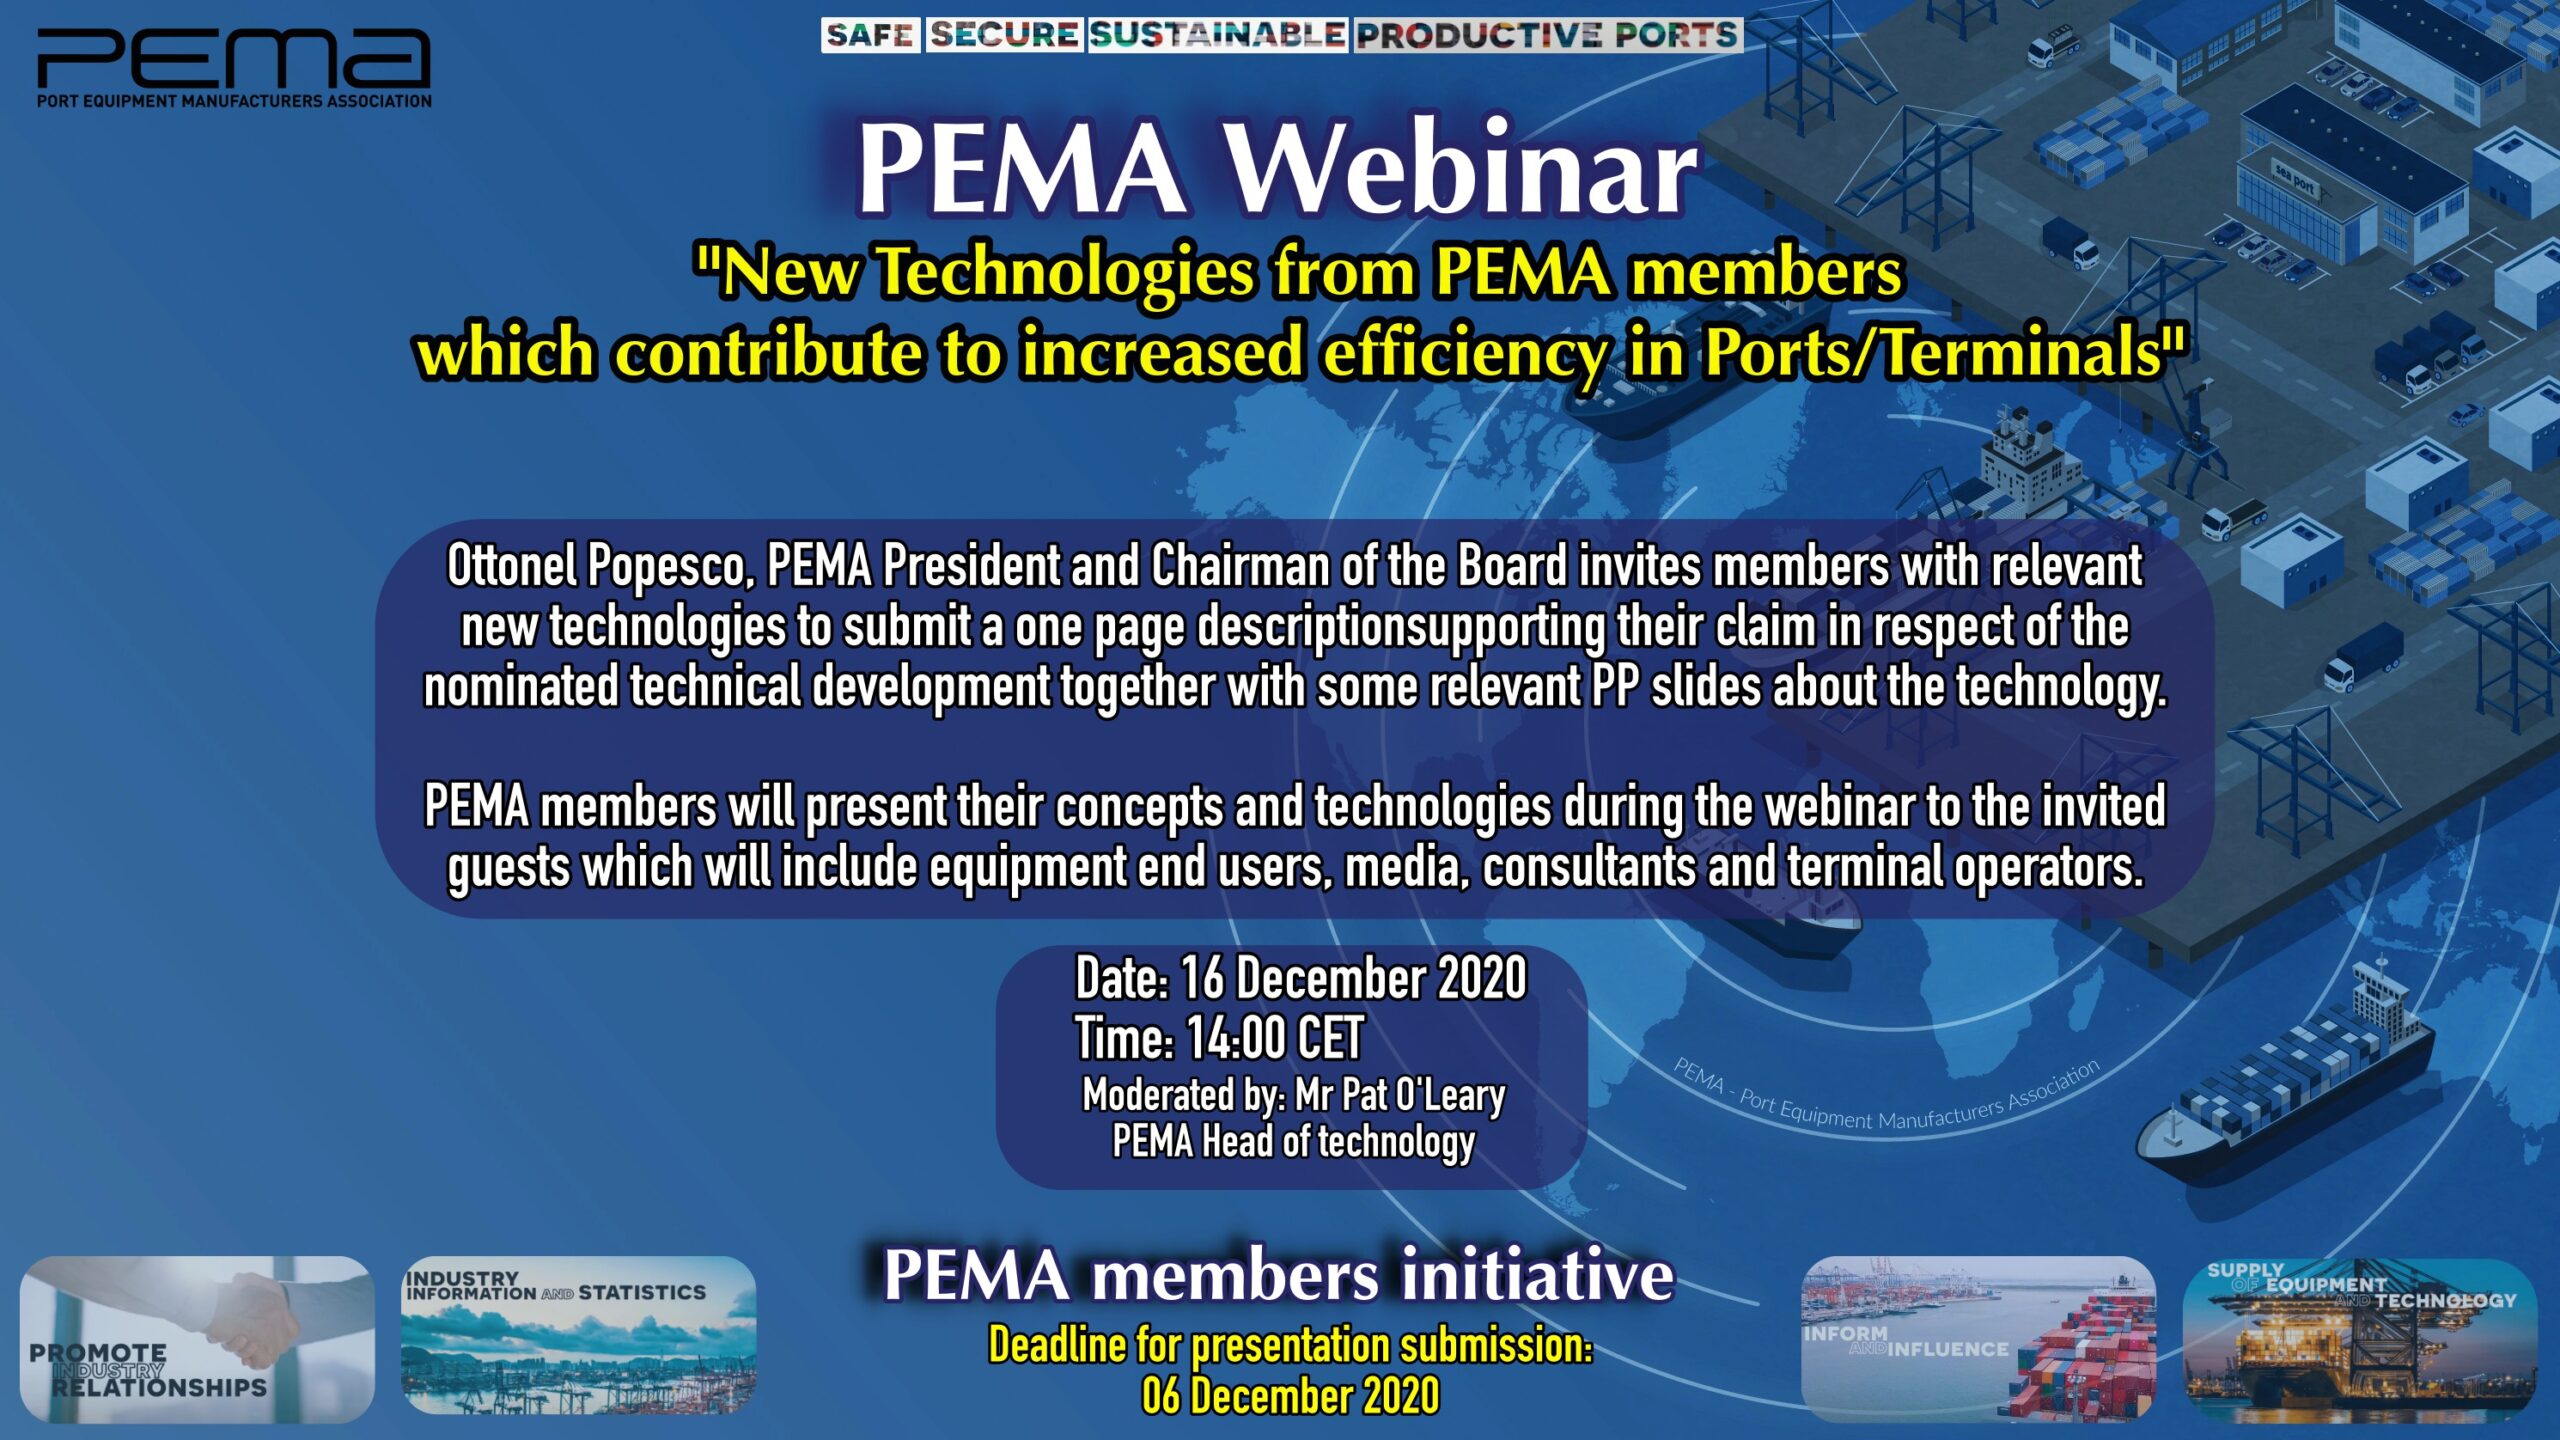 PEMA members webinar: Technologies that contribute to increased efficiency in Ports/Terminals